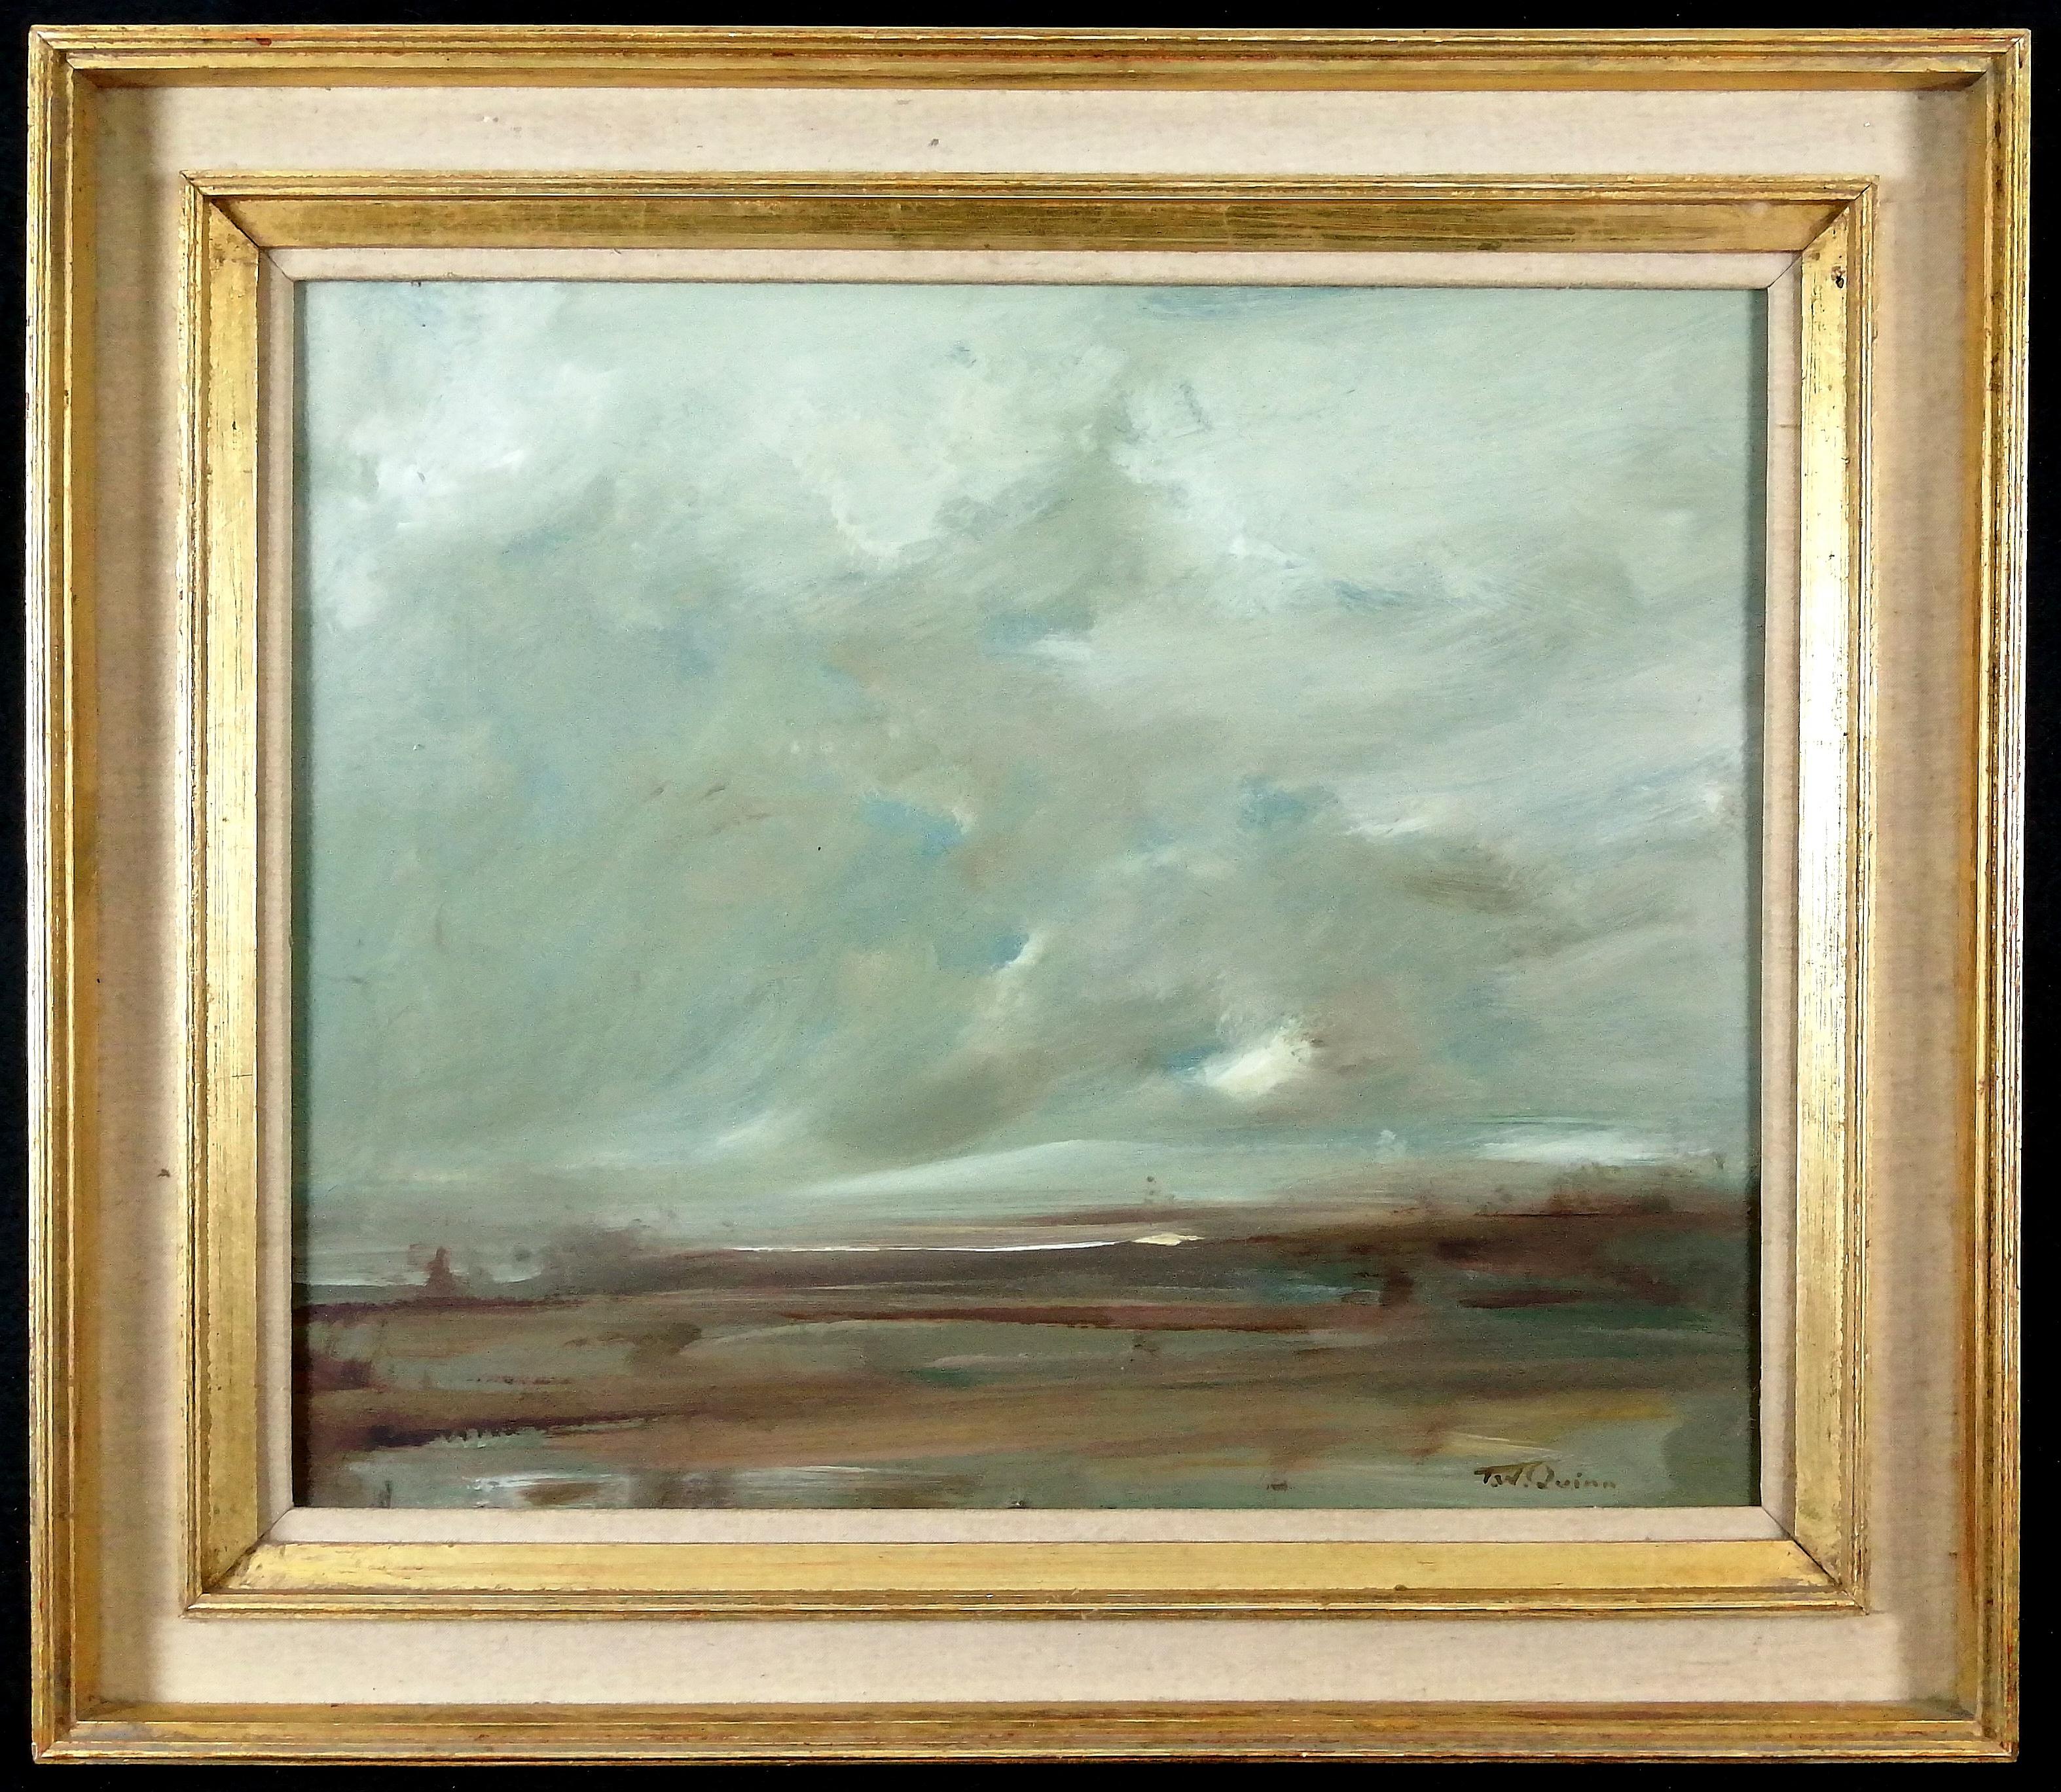 Tom W. Quinn Landscape Painting - Windswept Landscape - Fine Impressionist Atmospheric Oil on Board Painting